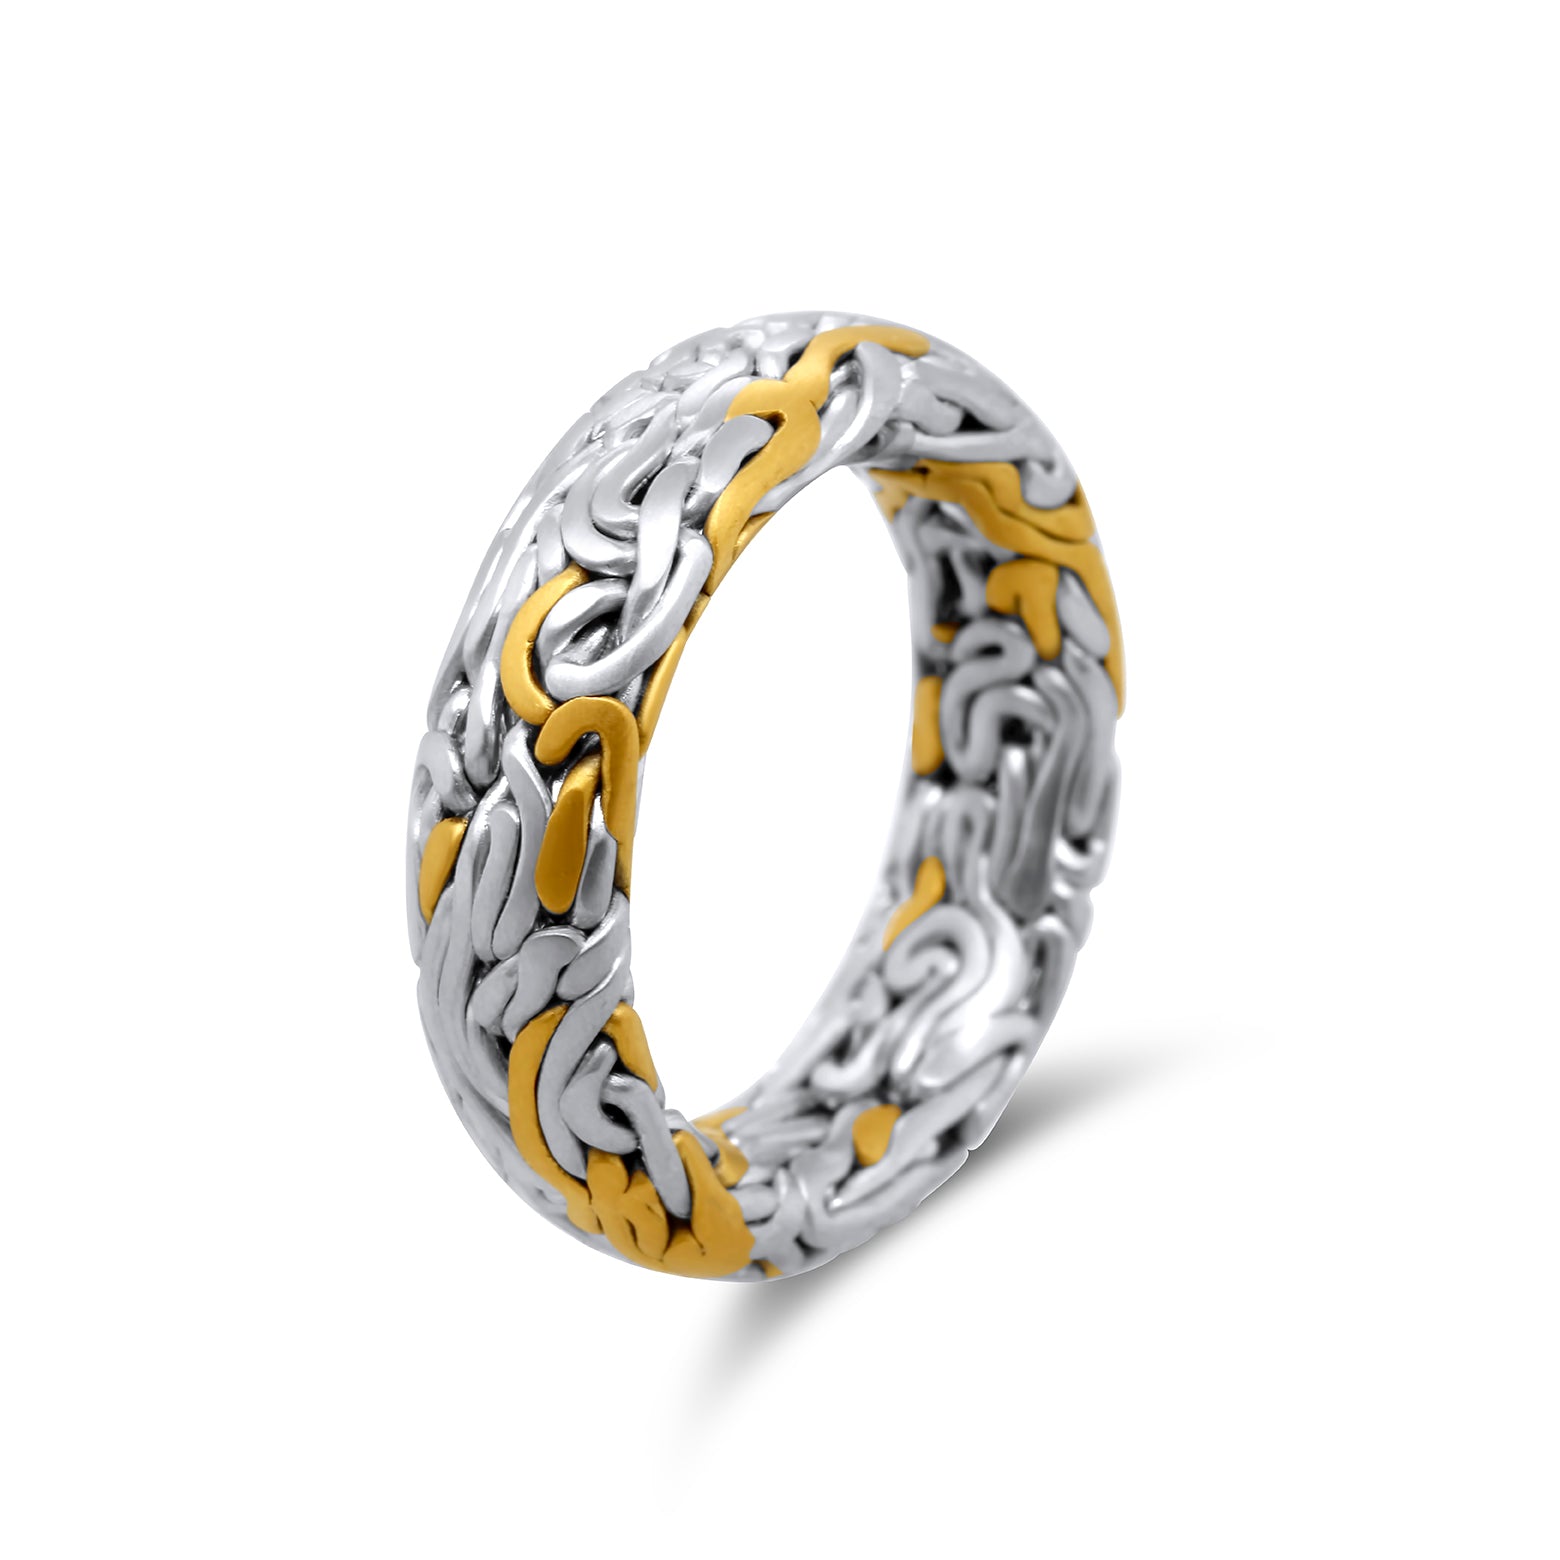 Sold at Auction: Schmuckkonvolut 2- teilig: NIESSING Ring 